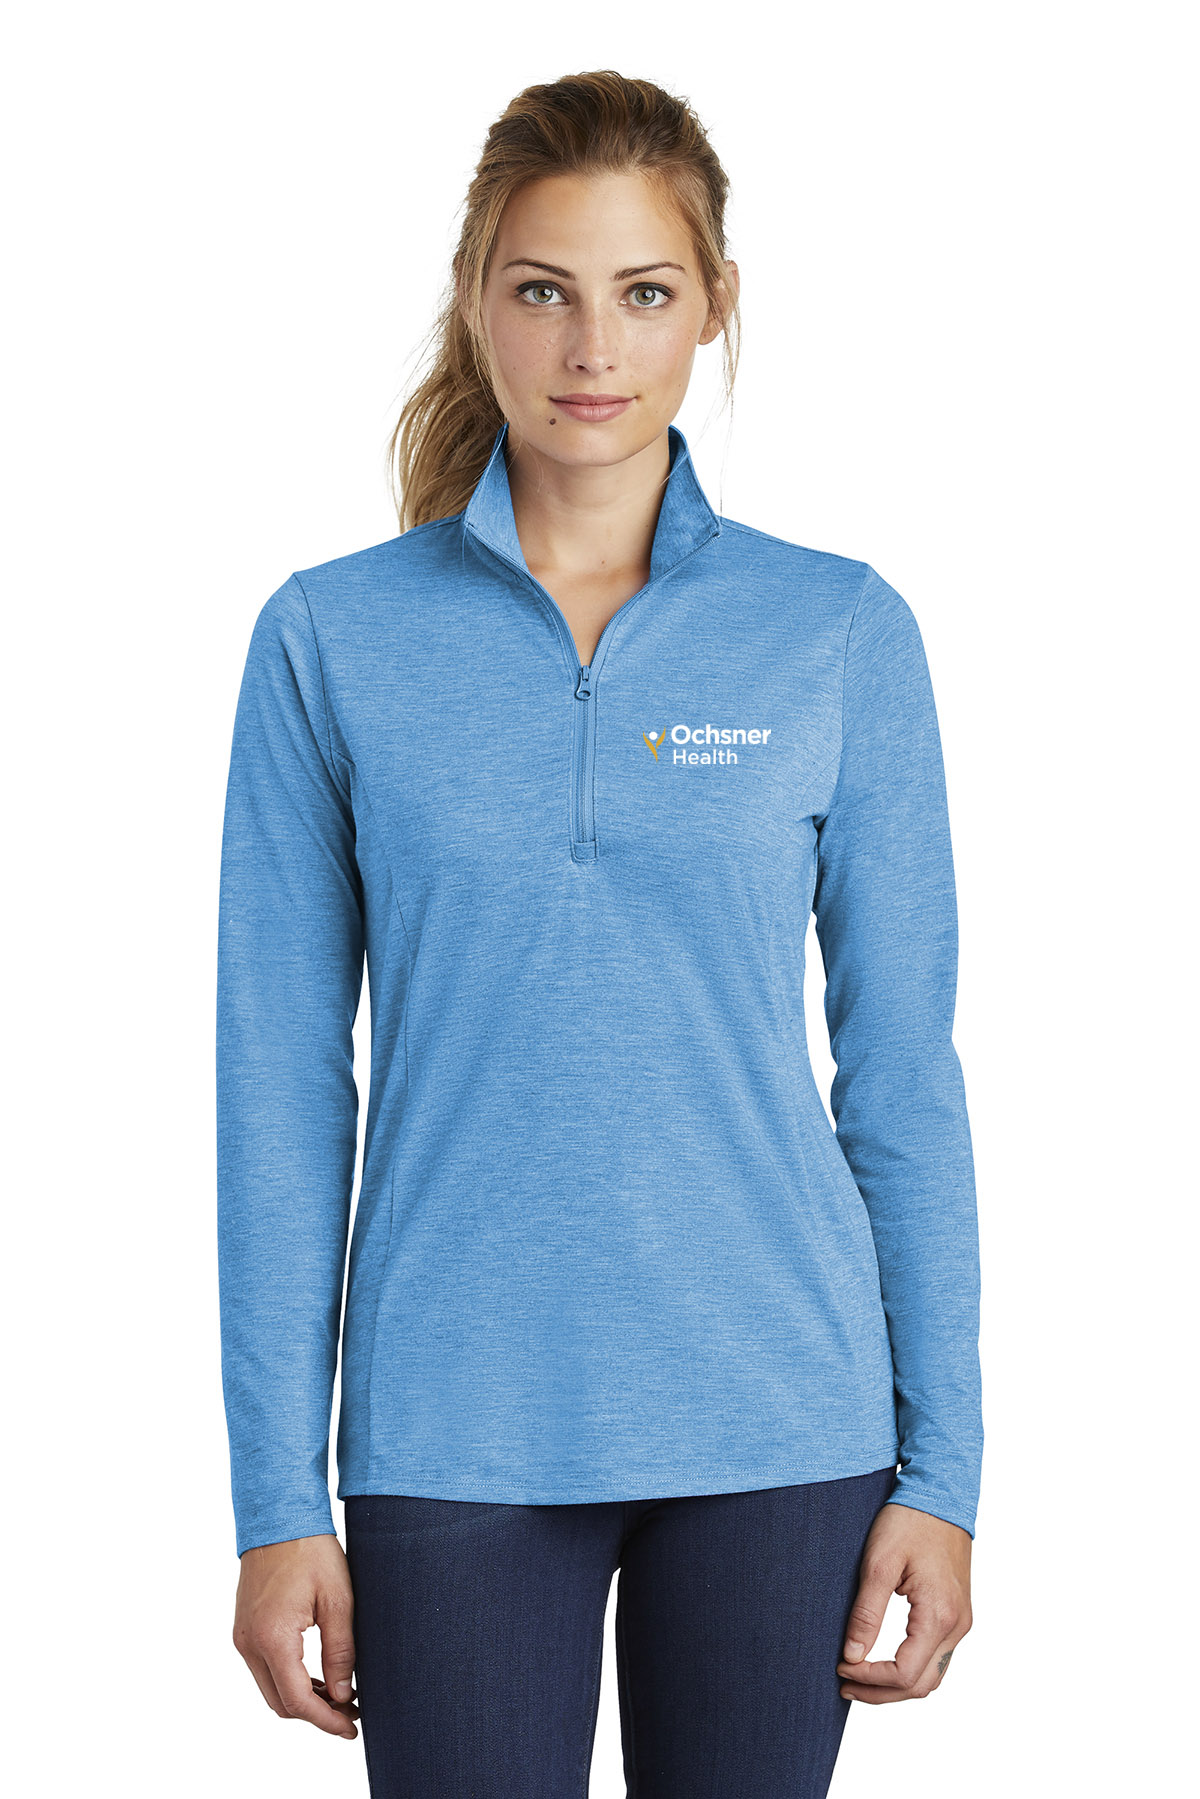 Sport-Tek Women's 1/4 Zip Pullover, Light Blue, large image number 1